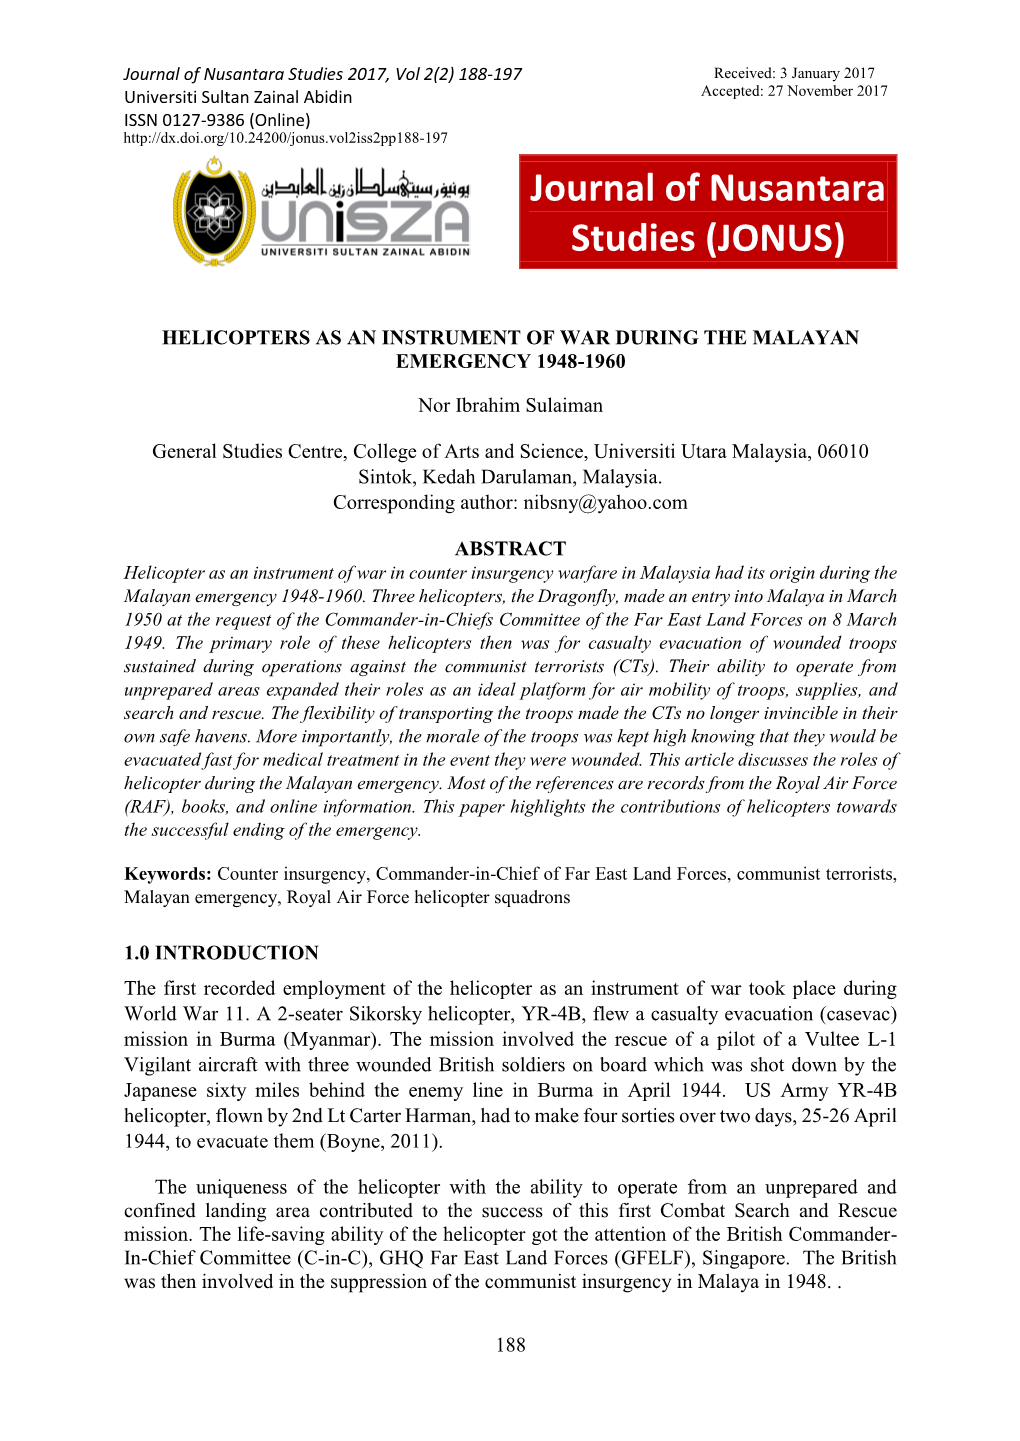 Journal of Nusantara Studies (JONUS)